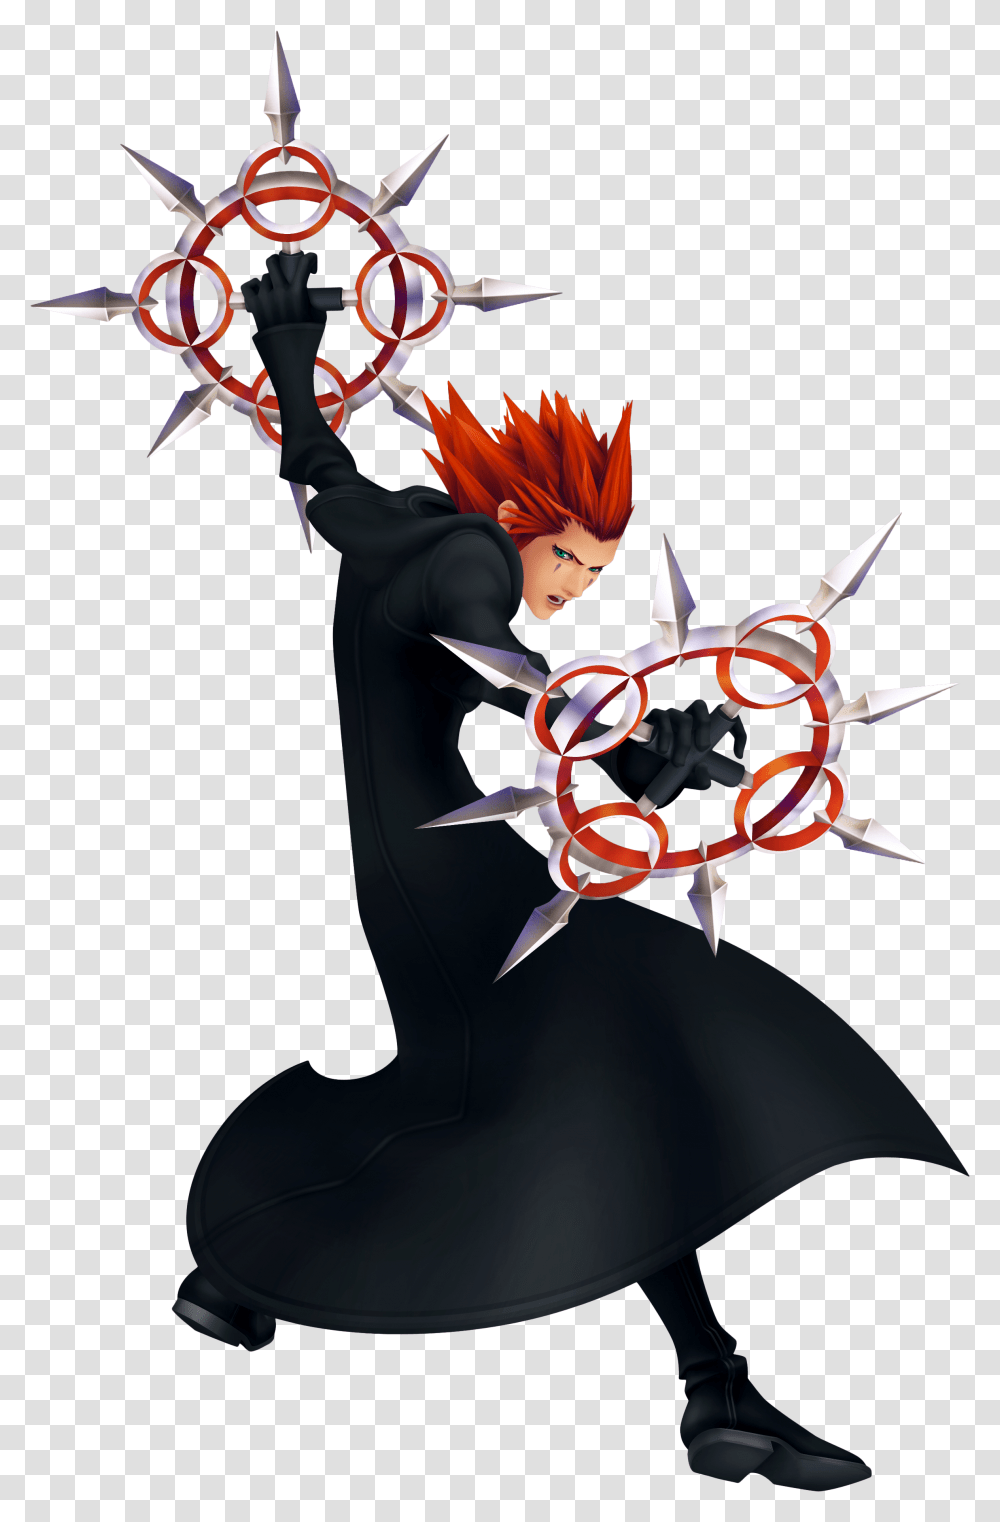 Axel Kingdom Hearts Roxas Icon, Clothing, Costume, Manga, Comics Transparent Png